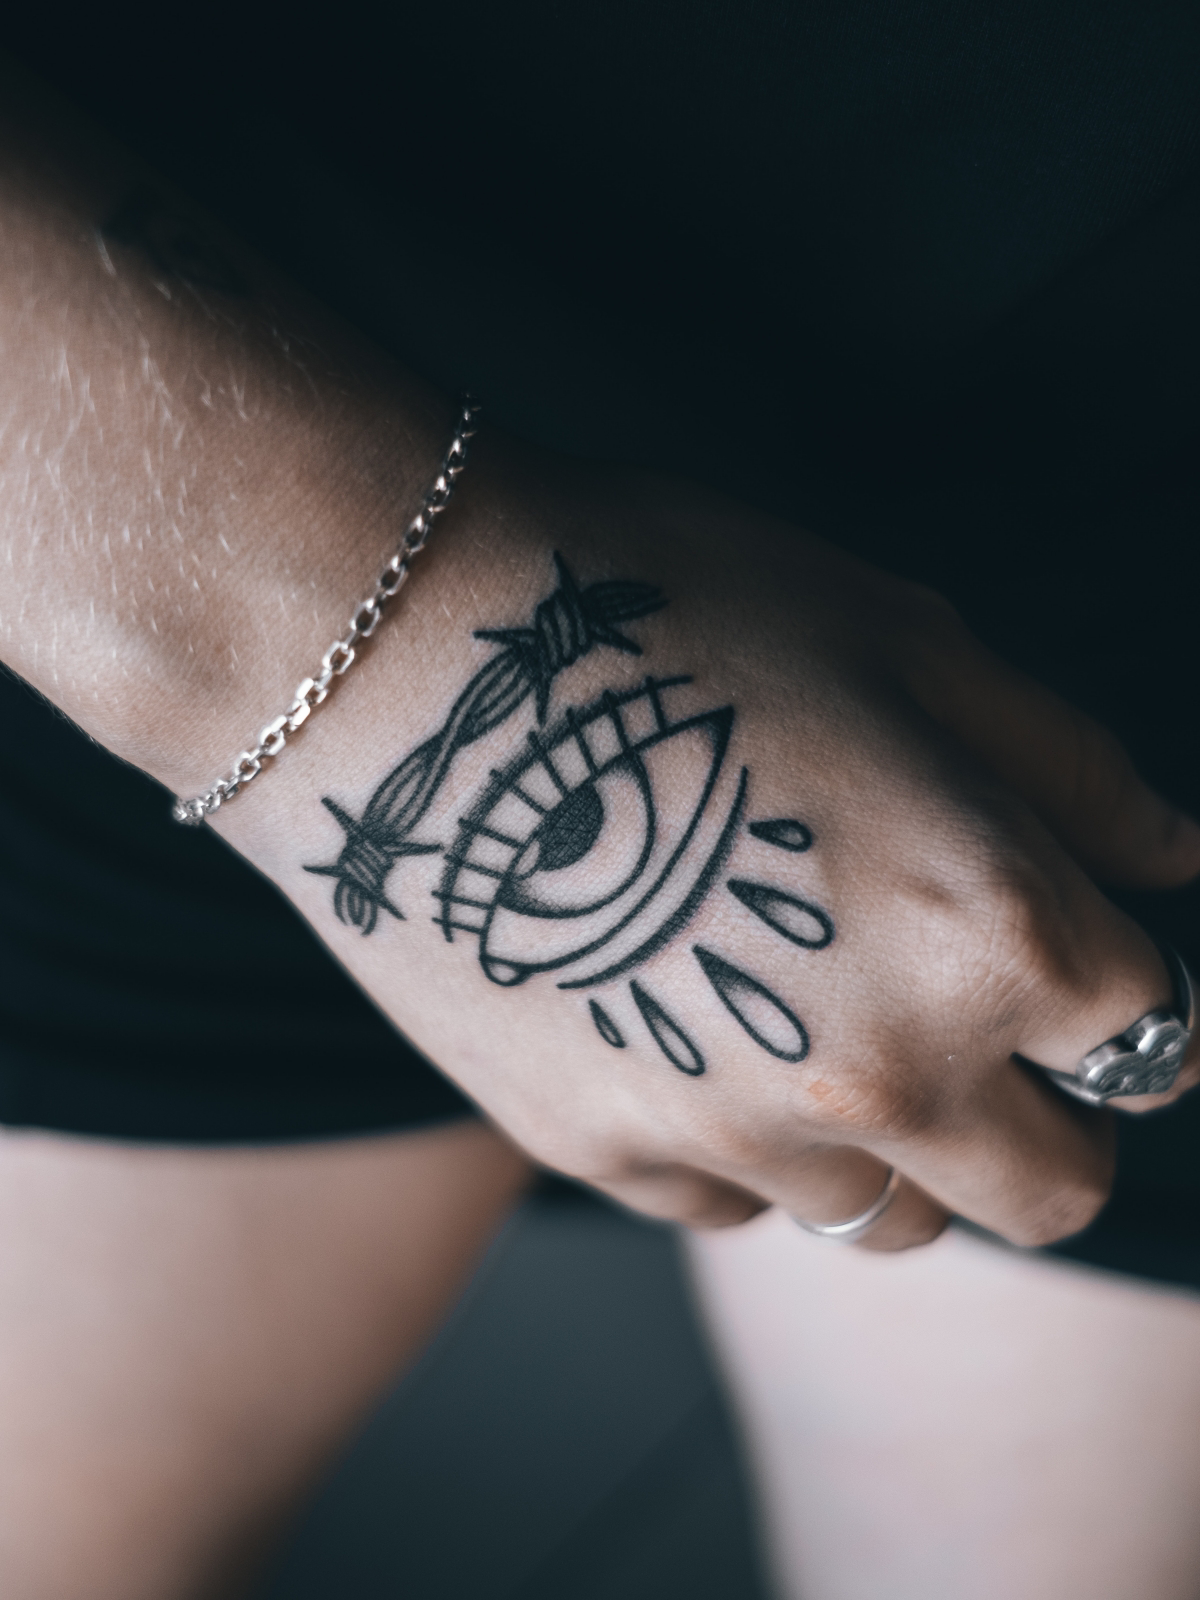 male hand tattoo designs